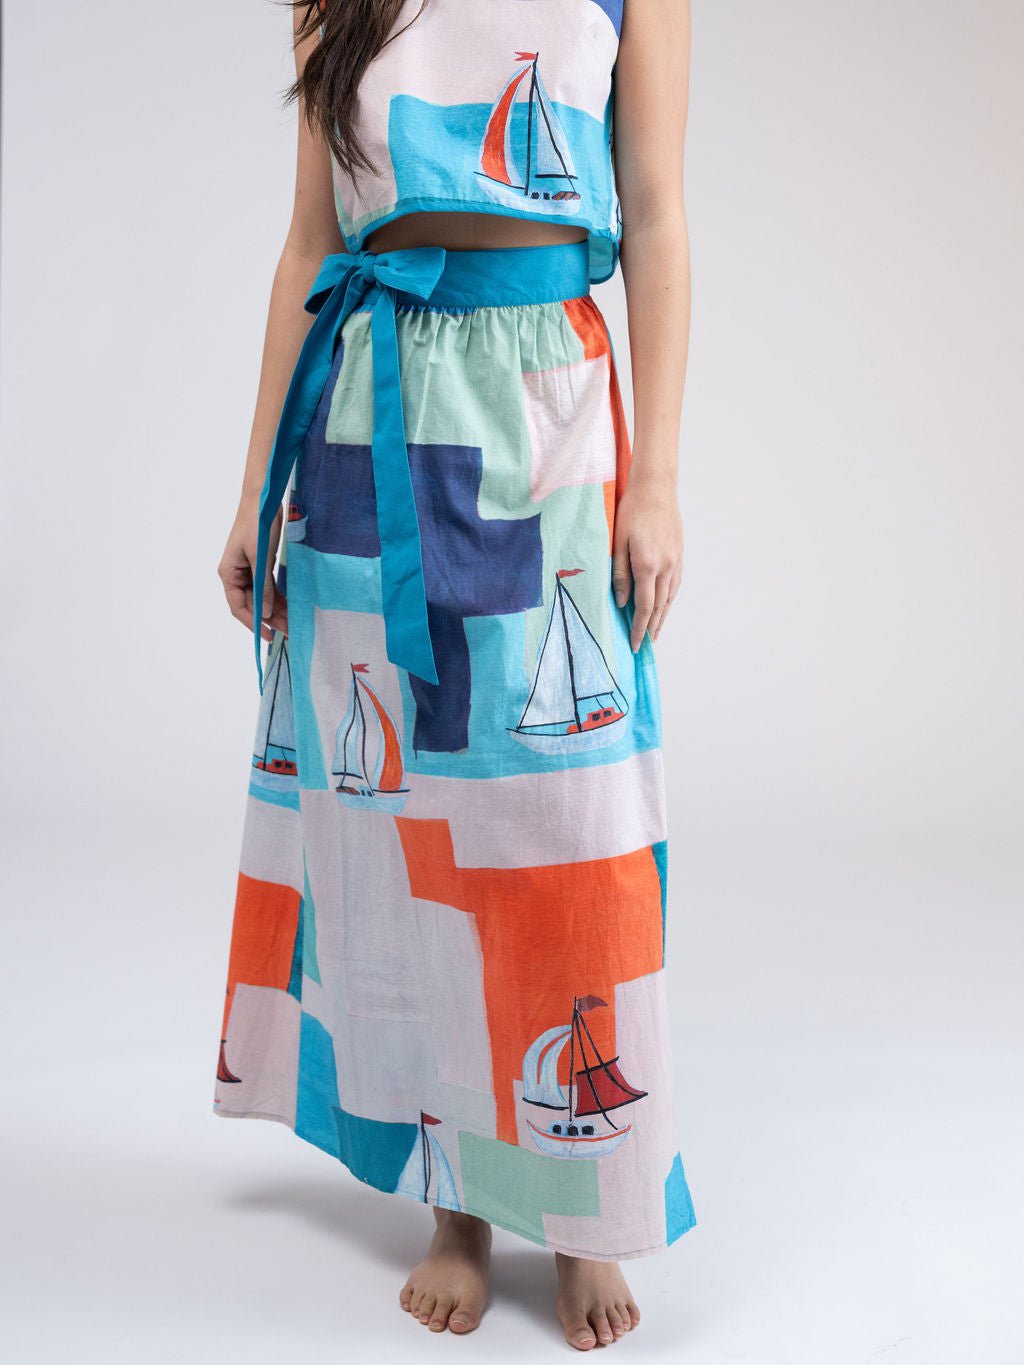 Beau & Ro Dress Small SAMPLE | The Sullivan Skirt | Sail Away | Small